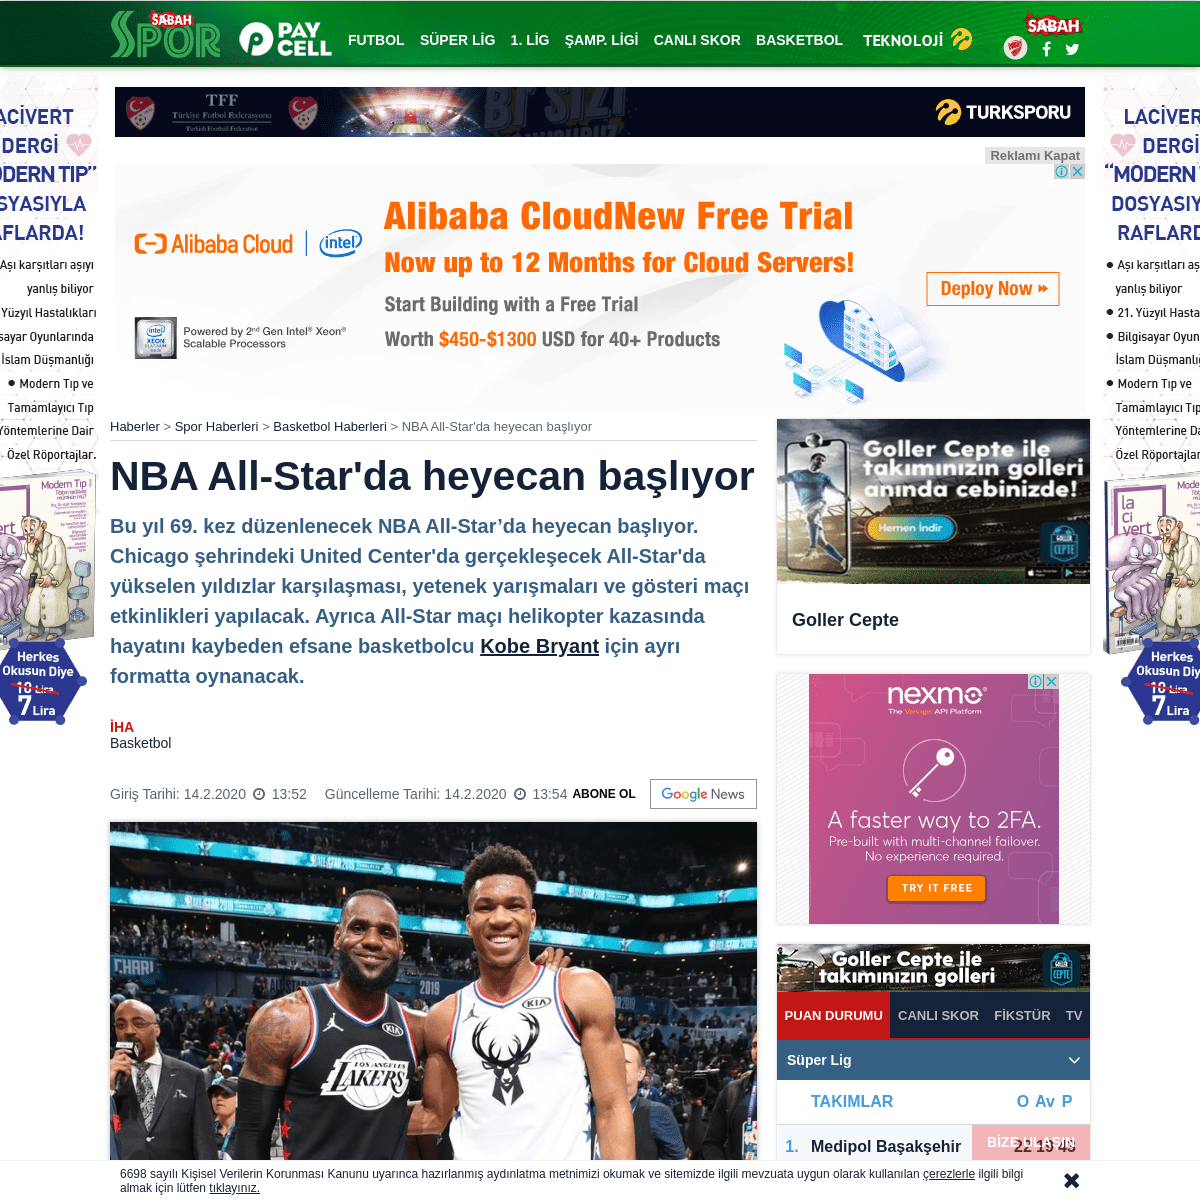 A complete backup of www.sabah.com.tr/spor/basketbol/2020/02/14/nba-all-starda-heyecani-basliyor